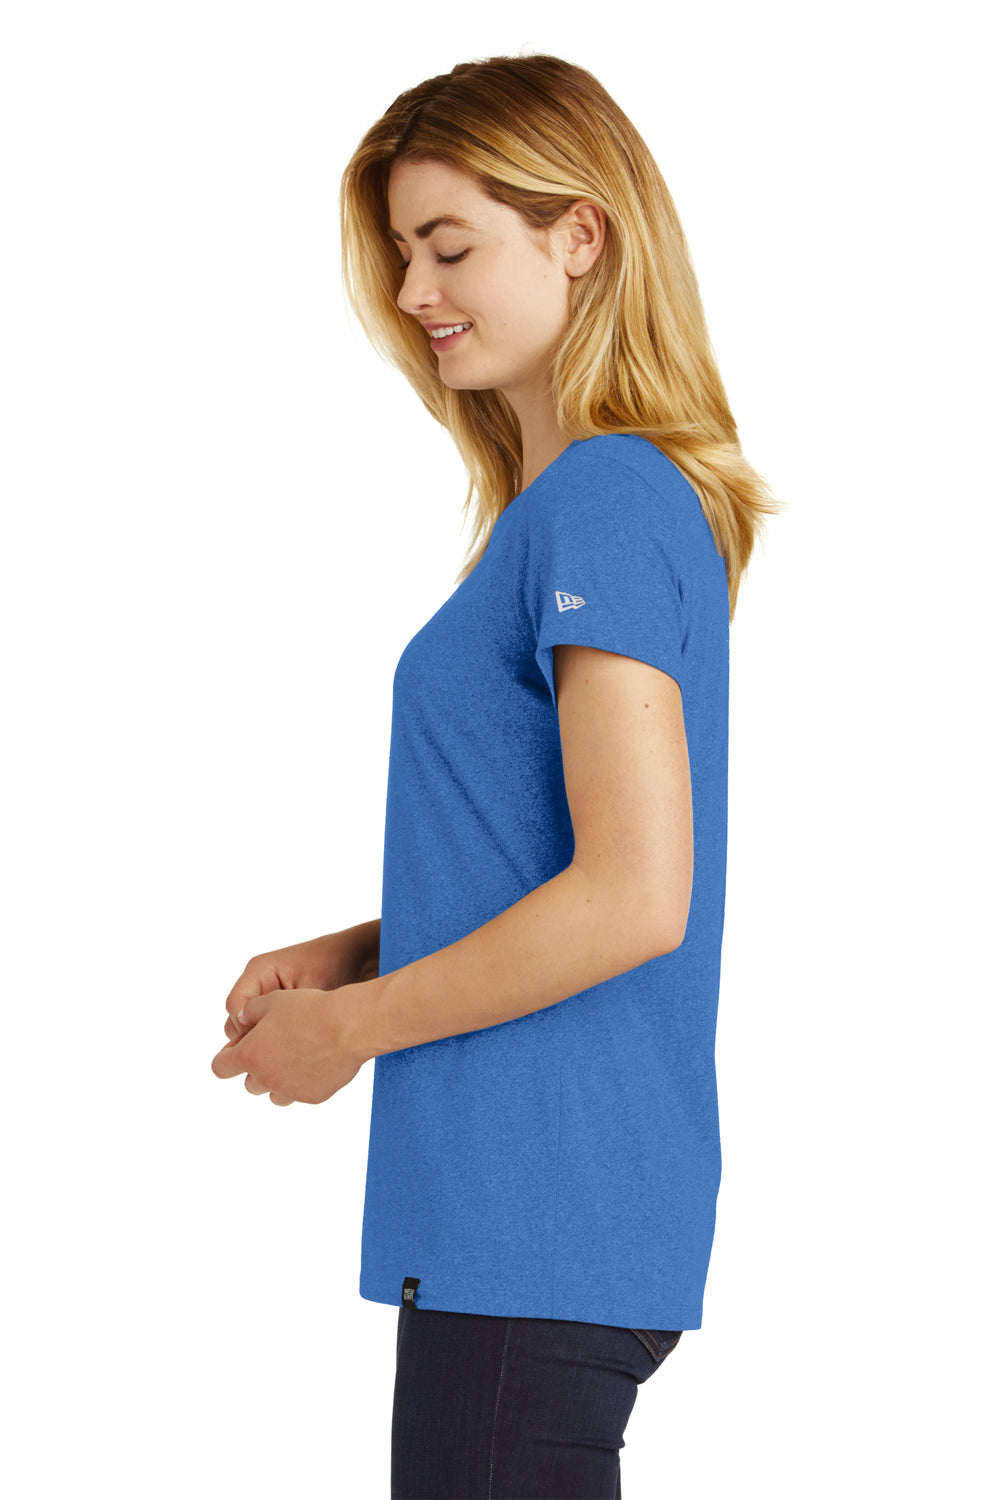 New Era LNEA100 Womens Heritage Short Sleeve Crewneck T-Shirt Heather Royal Blue Side